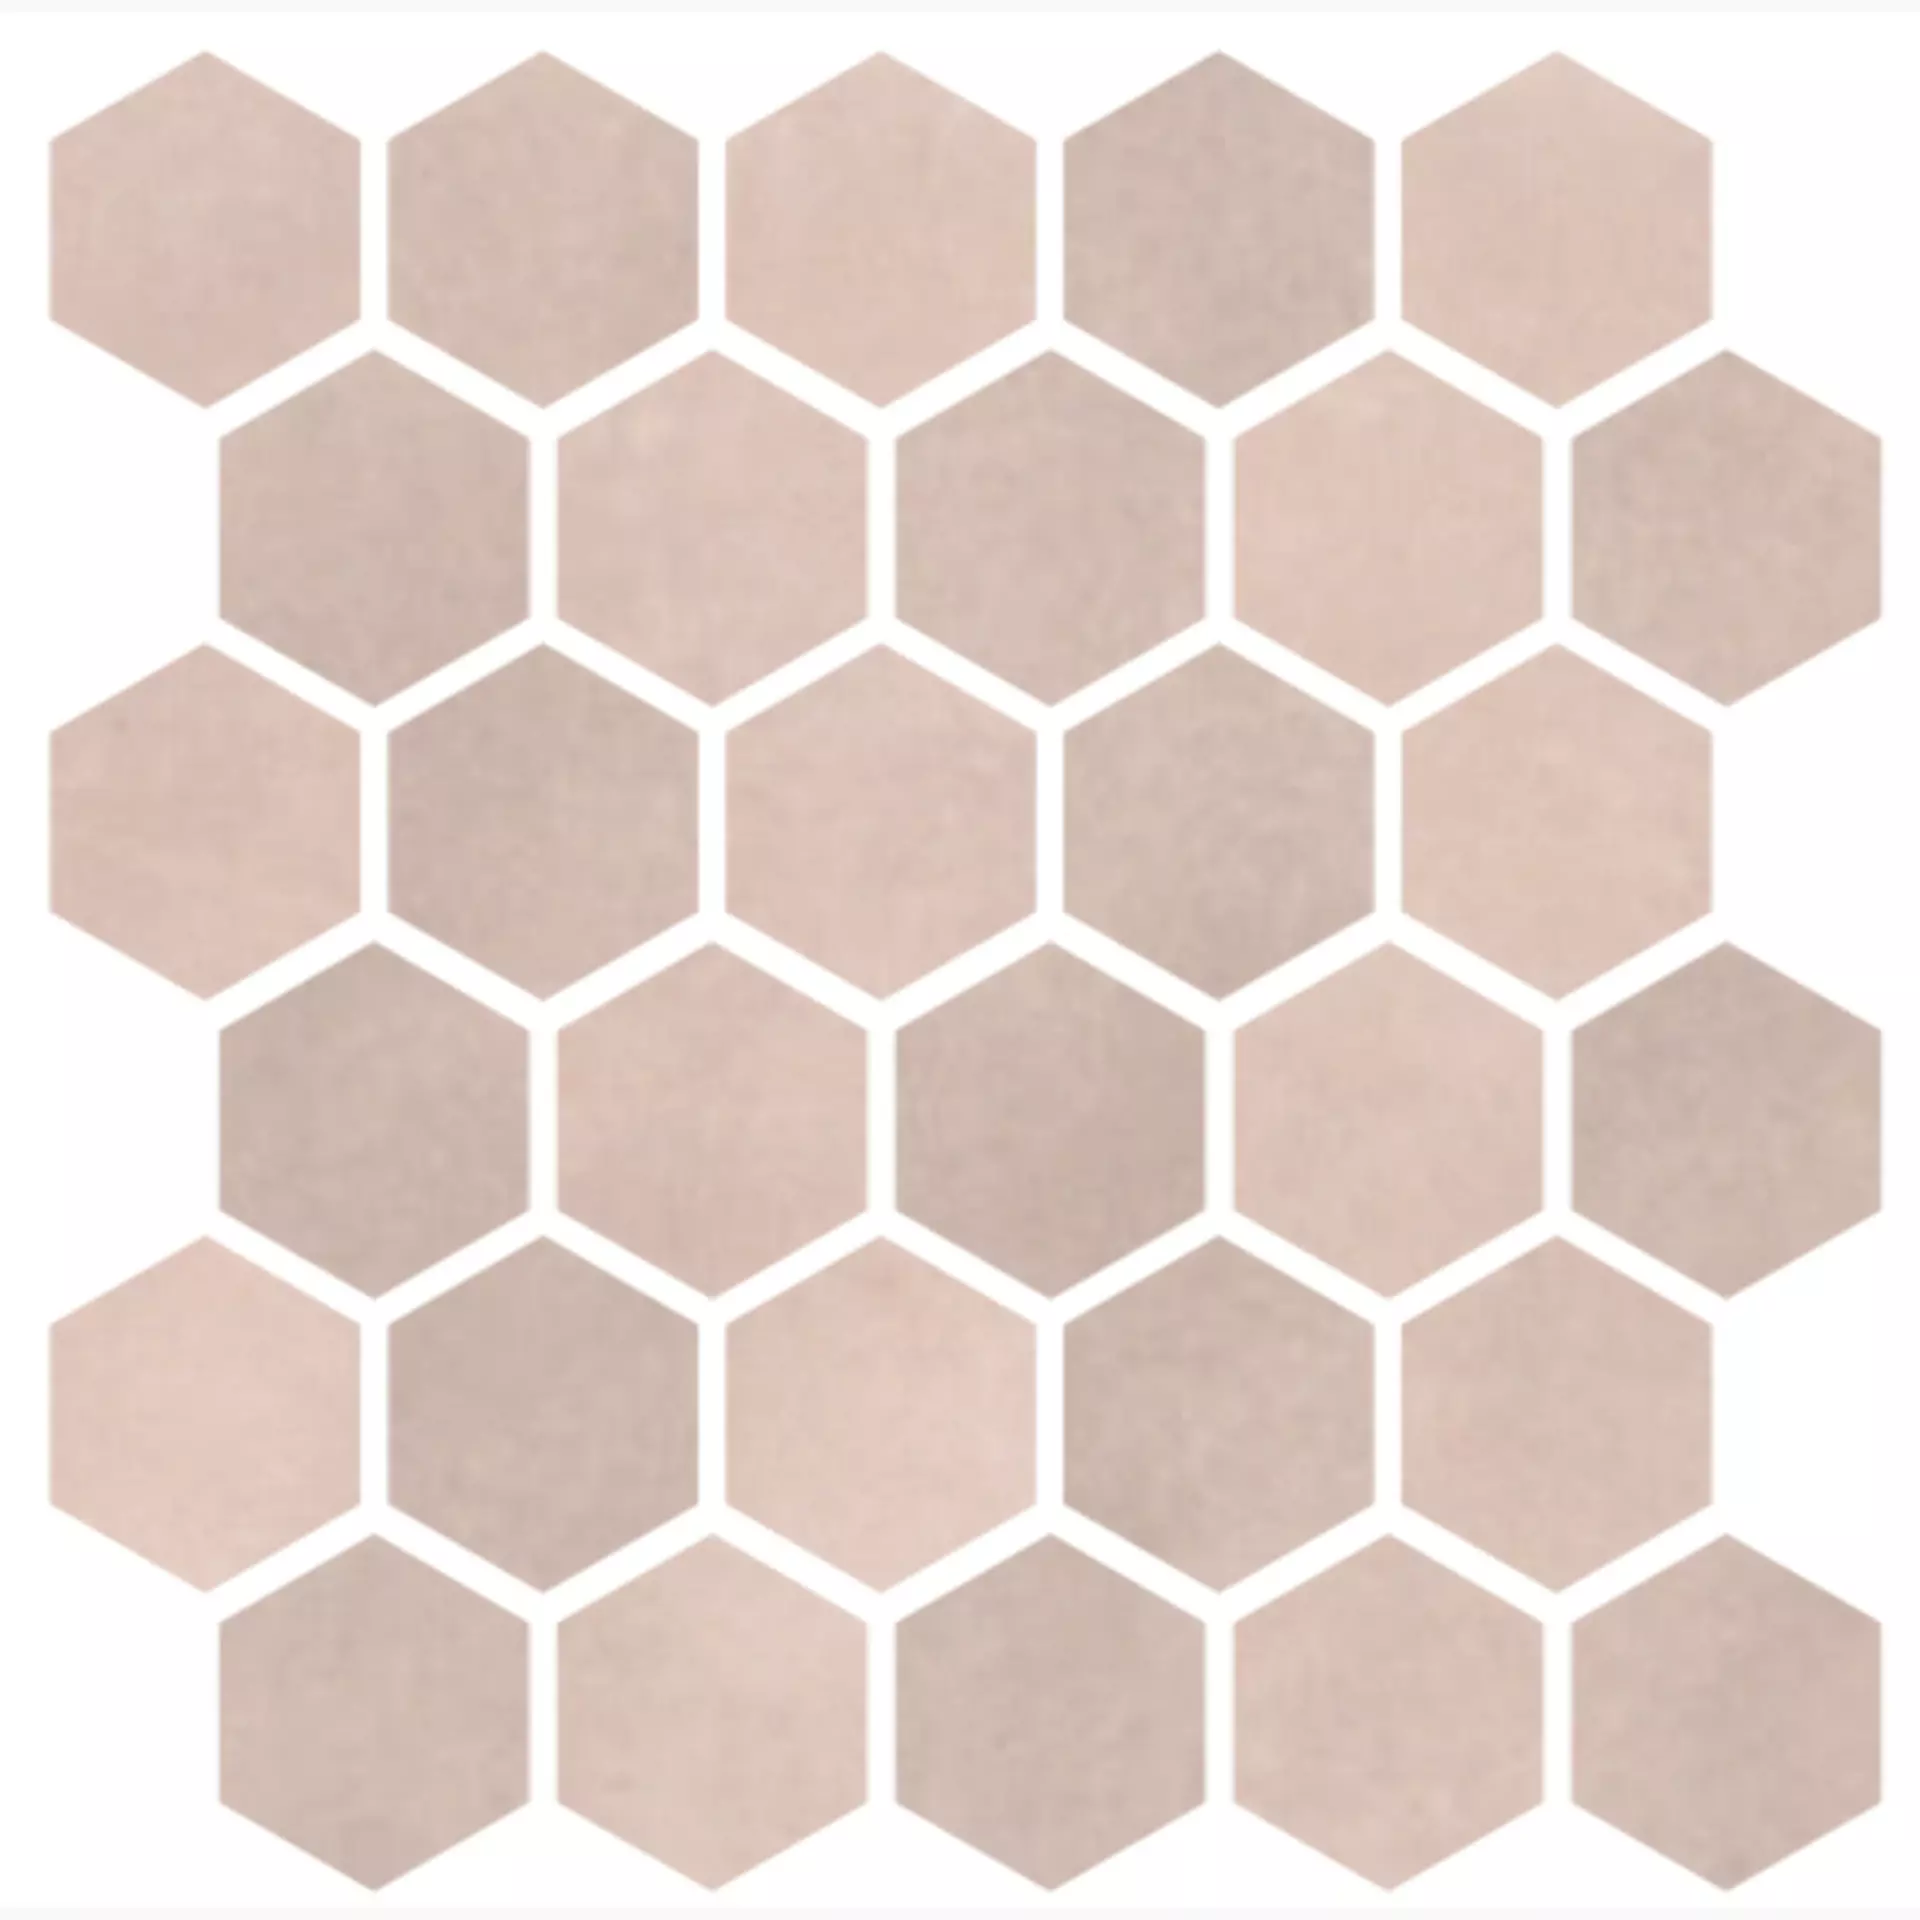 CIR Materia Prima Pink Velvet Naturale Mosaik Hexagon 1069917 27x27cm